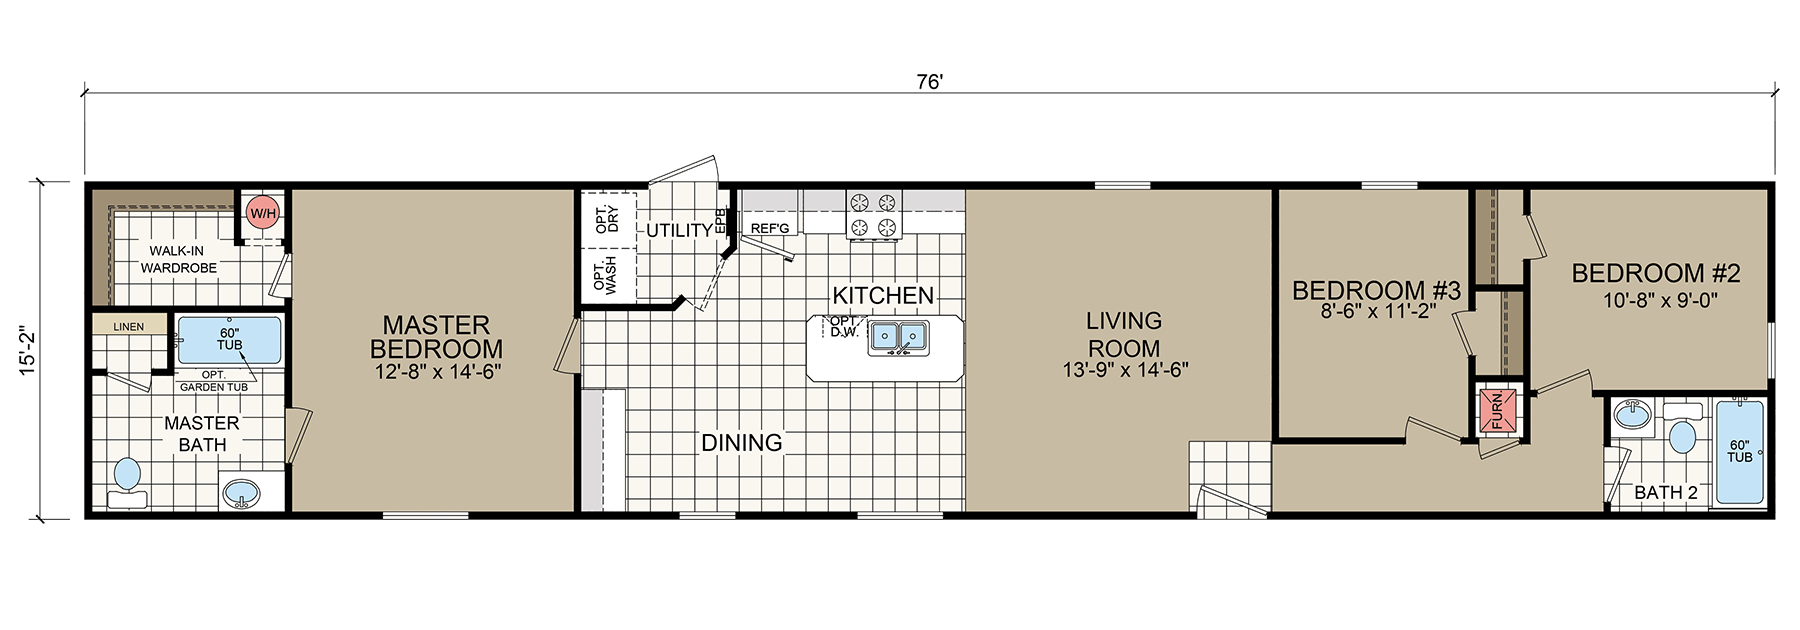 DD 209 Floor Plan